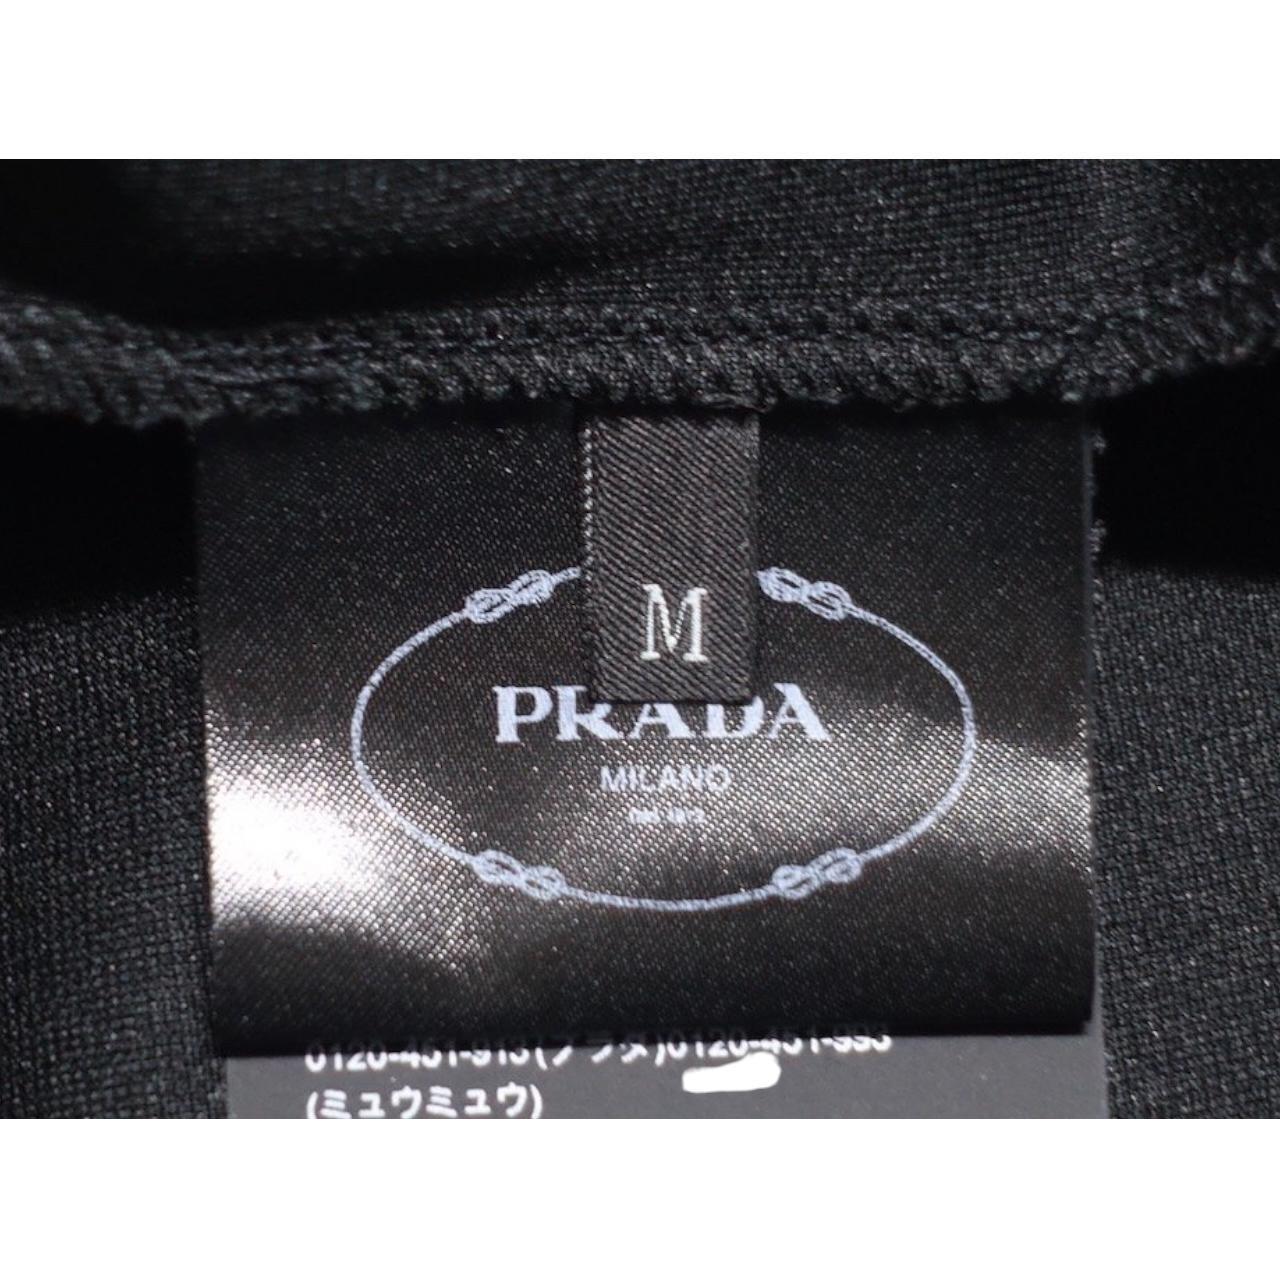 Prada triangle-logo crewneck sweatshirt polyester - Known Source